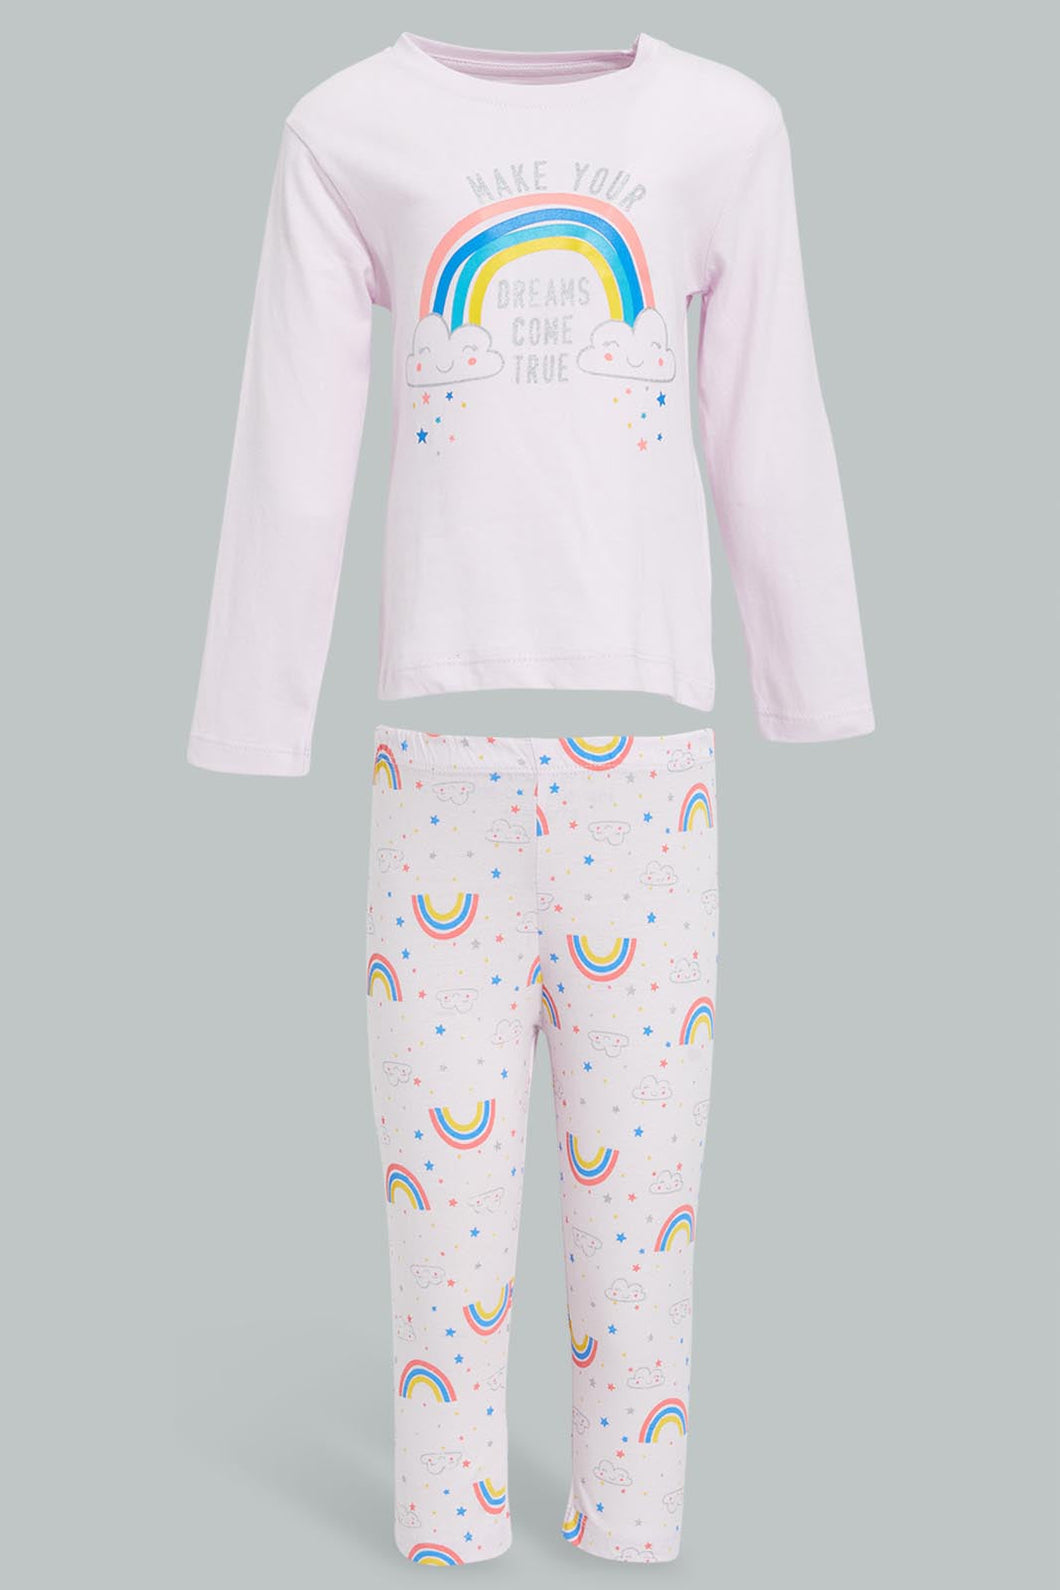 Lilac Rainbow Pyjama Set For Baby Girls (2 Piece) طقم بيجامة بطبعة قوس قزح باللون الليلك للبنات الرضع (قطعتين)